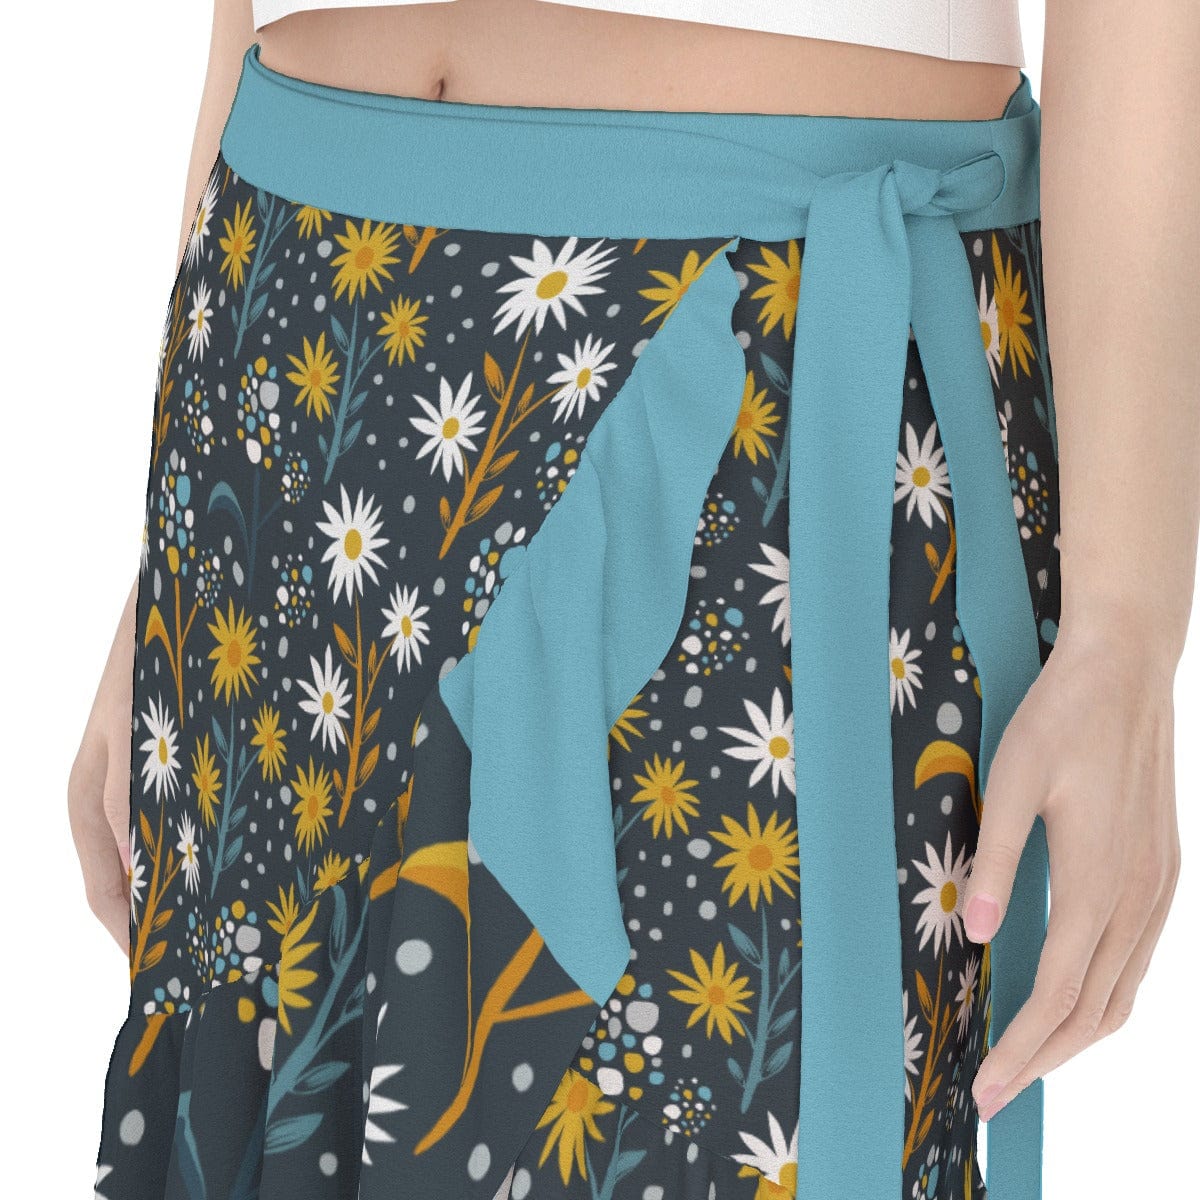 Yoycol Skirt 2XL / Deep Blue Blue Retro Floral - Women's Wrap Skirt